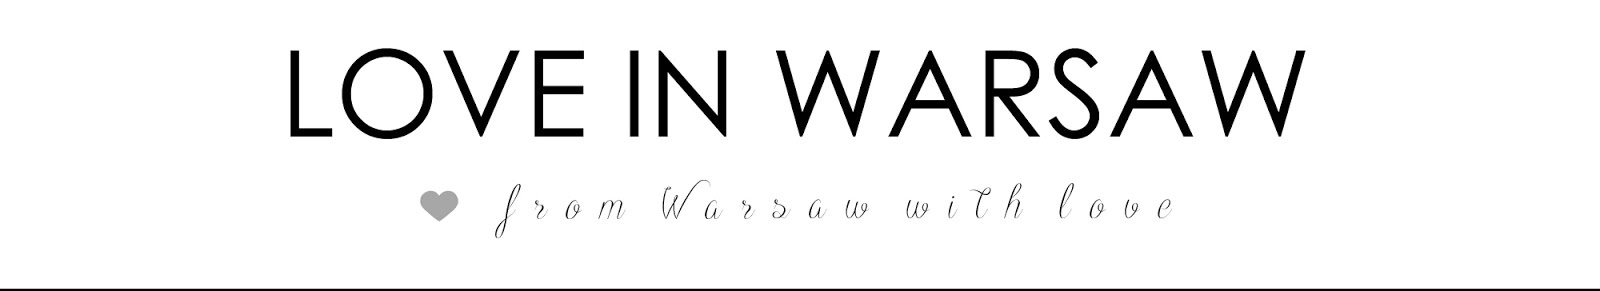 LOVE IN WARSAW - Blog modowy ze stolicą w tle